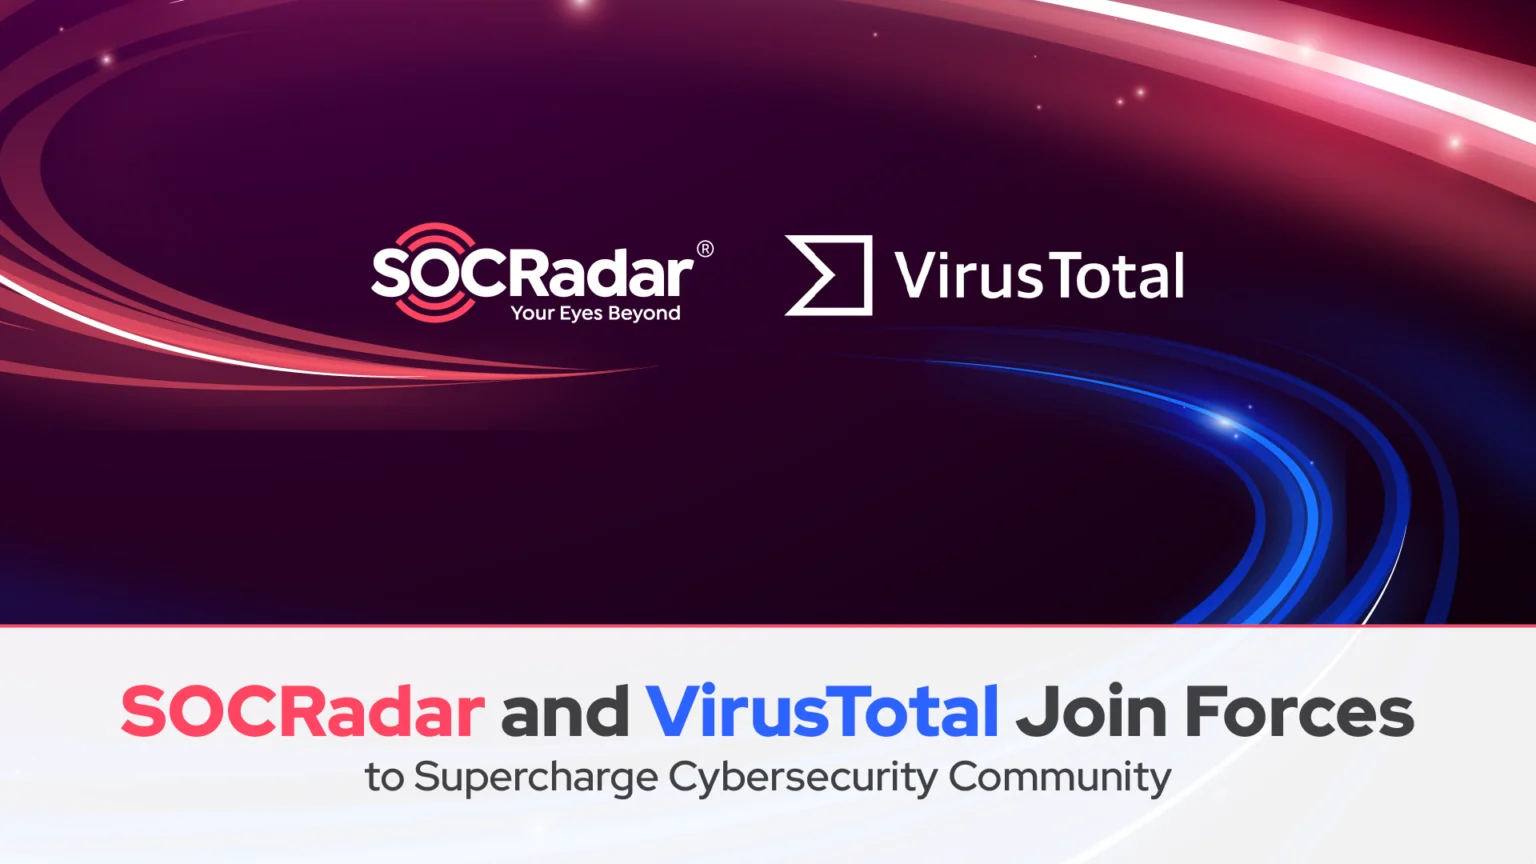 partnership between SOCRadar and Virus Total